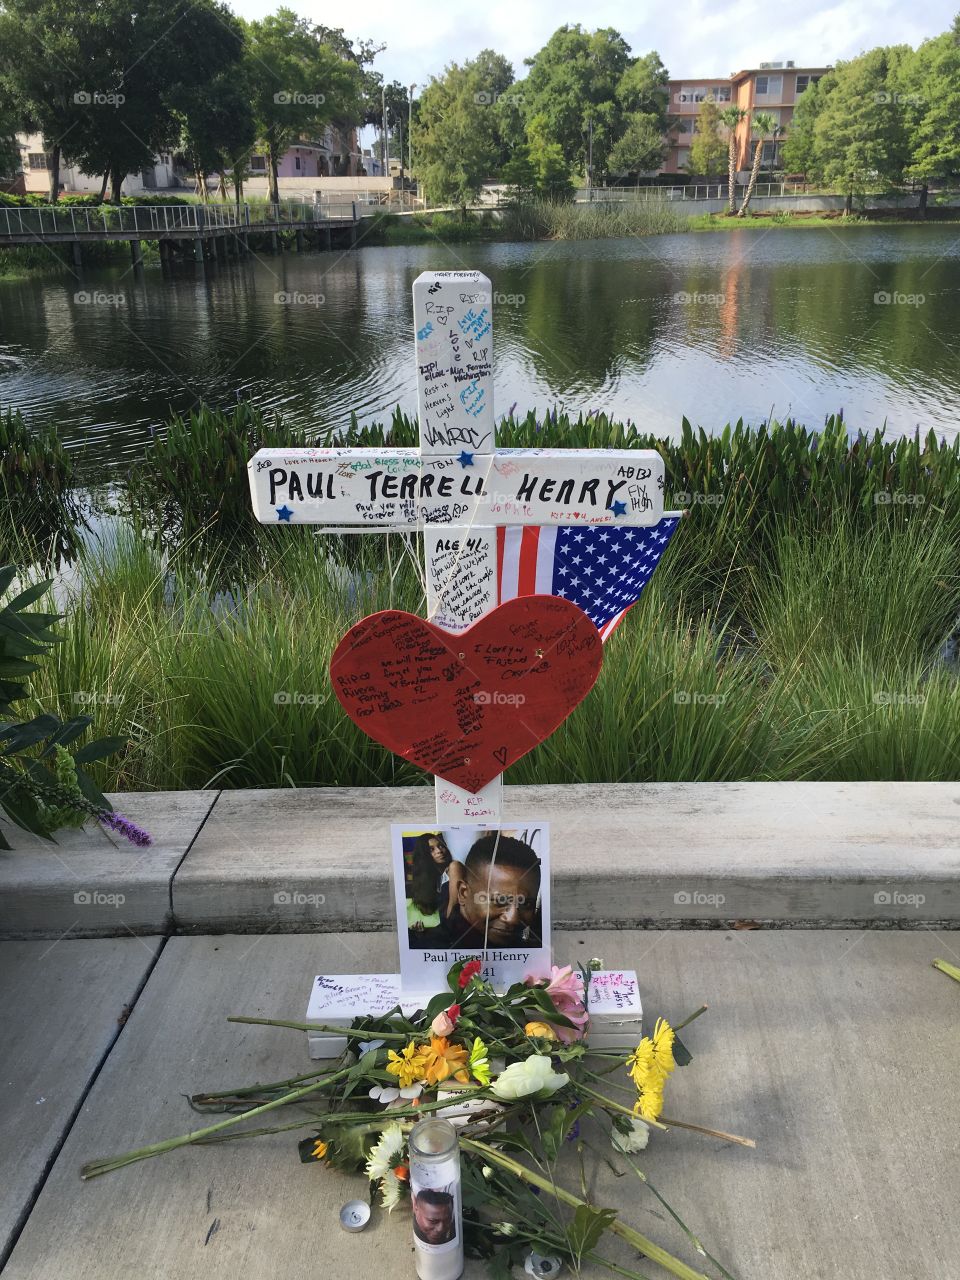 In memory of Pulse victim PAUL TERRELL HENRY. 